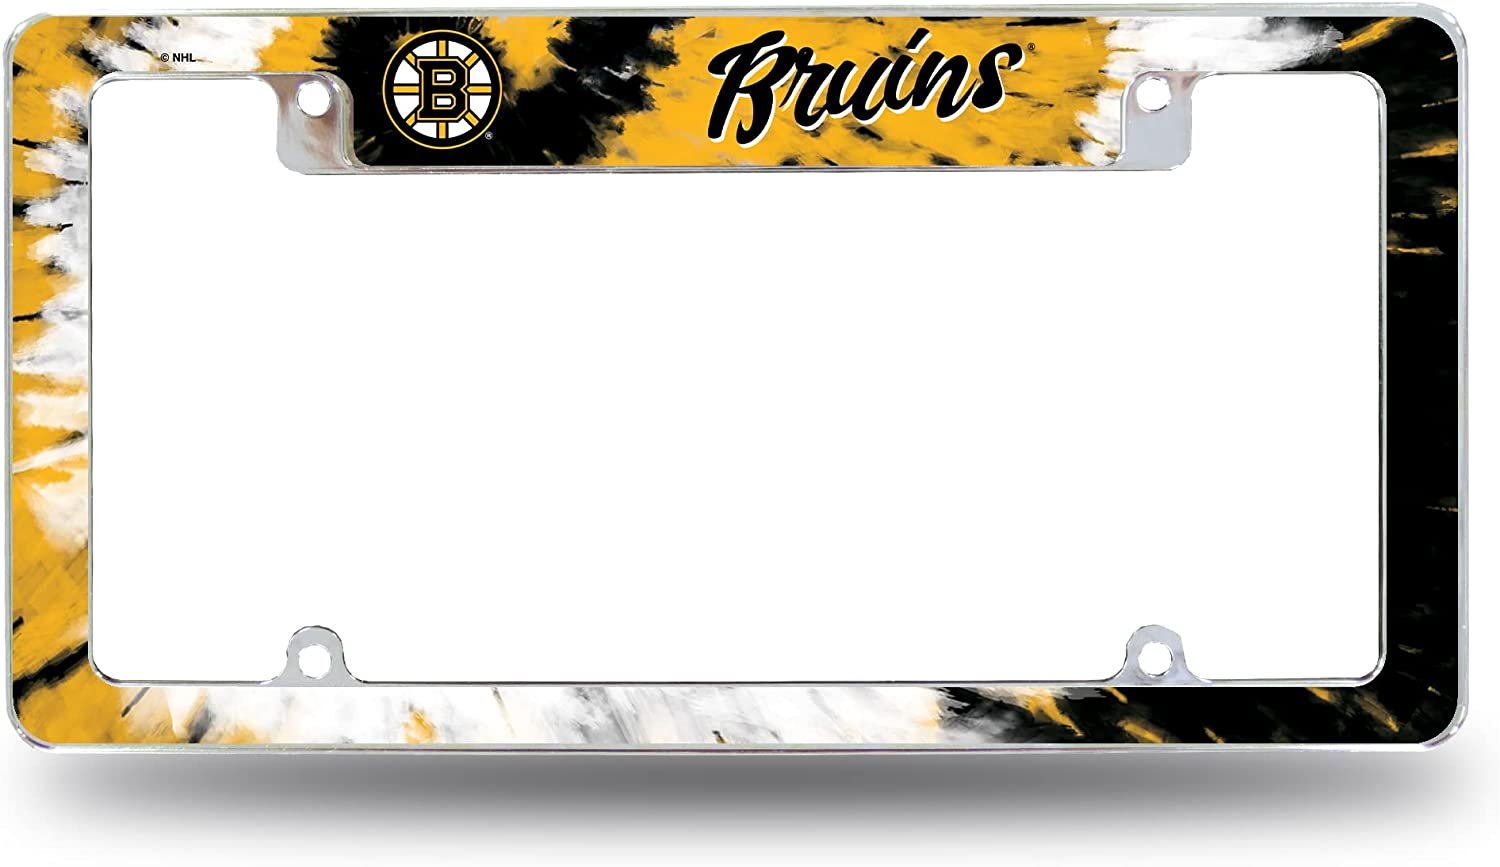 Boston Bruins Metal License Plate Frame Chrome Tag Cover Tie Dye Design 6x12 Inch